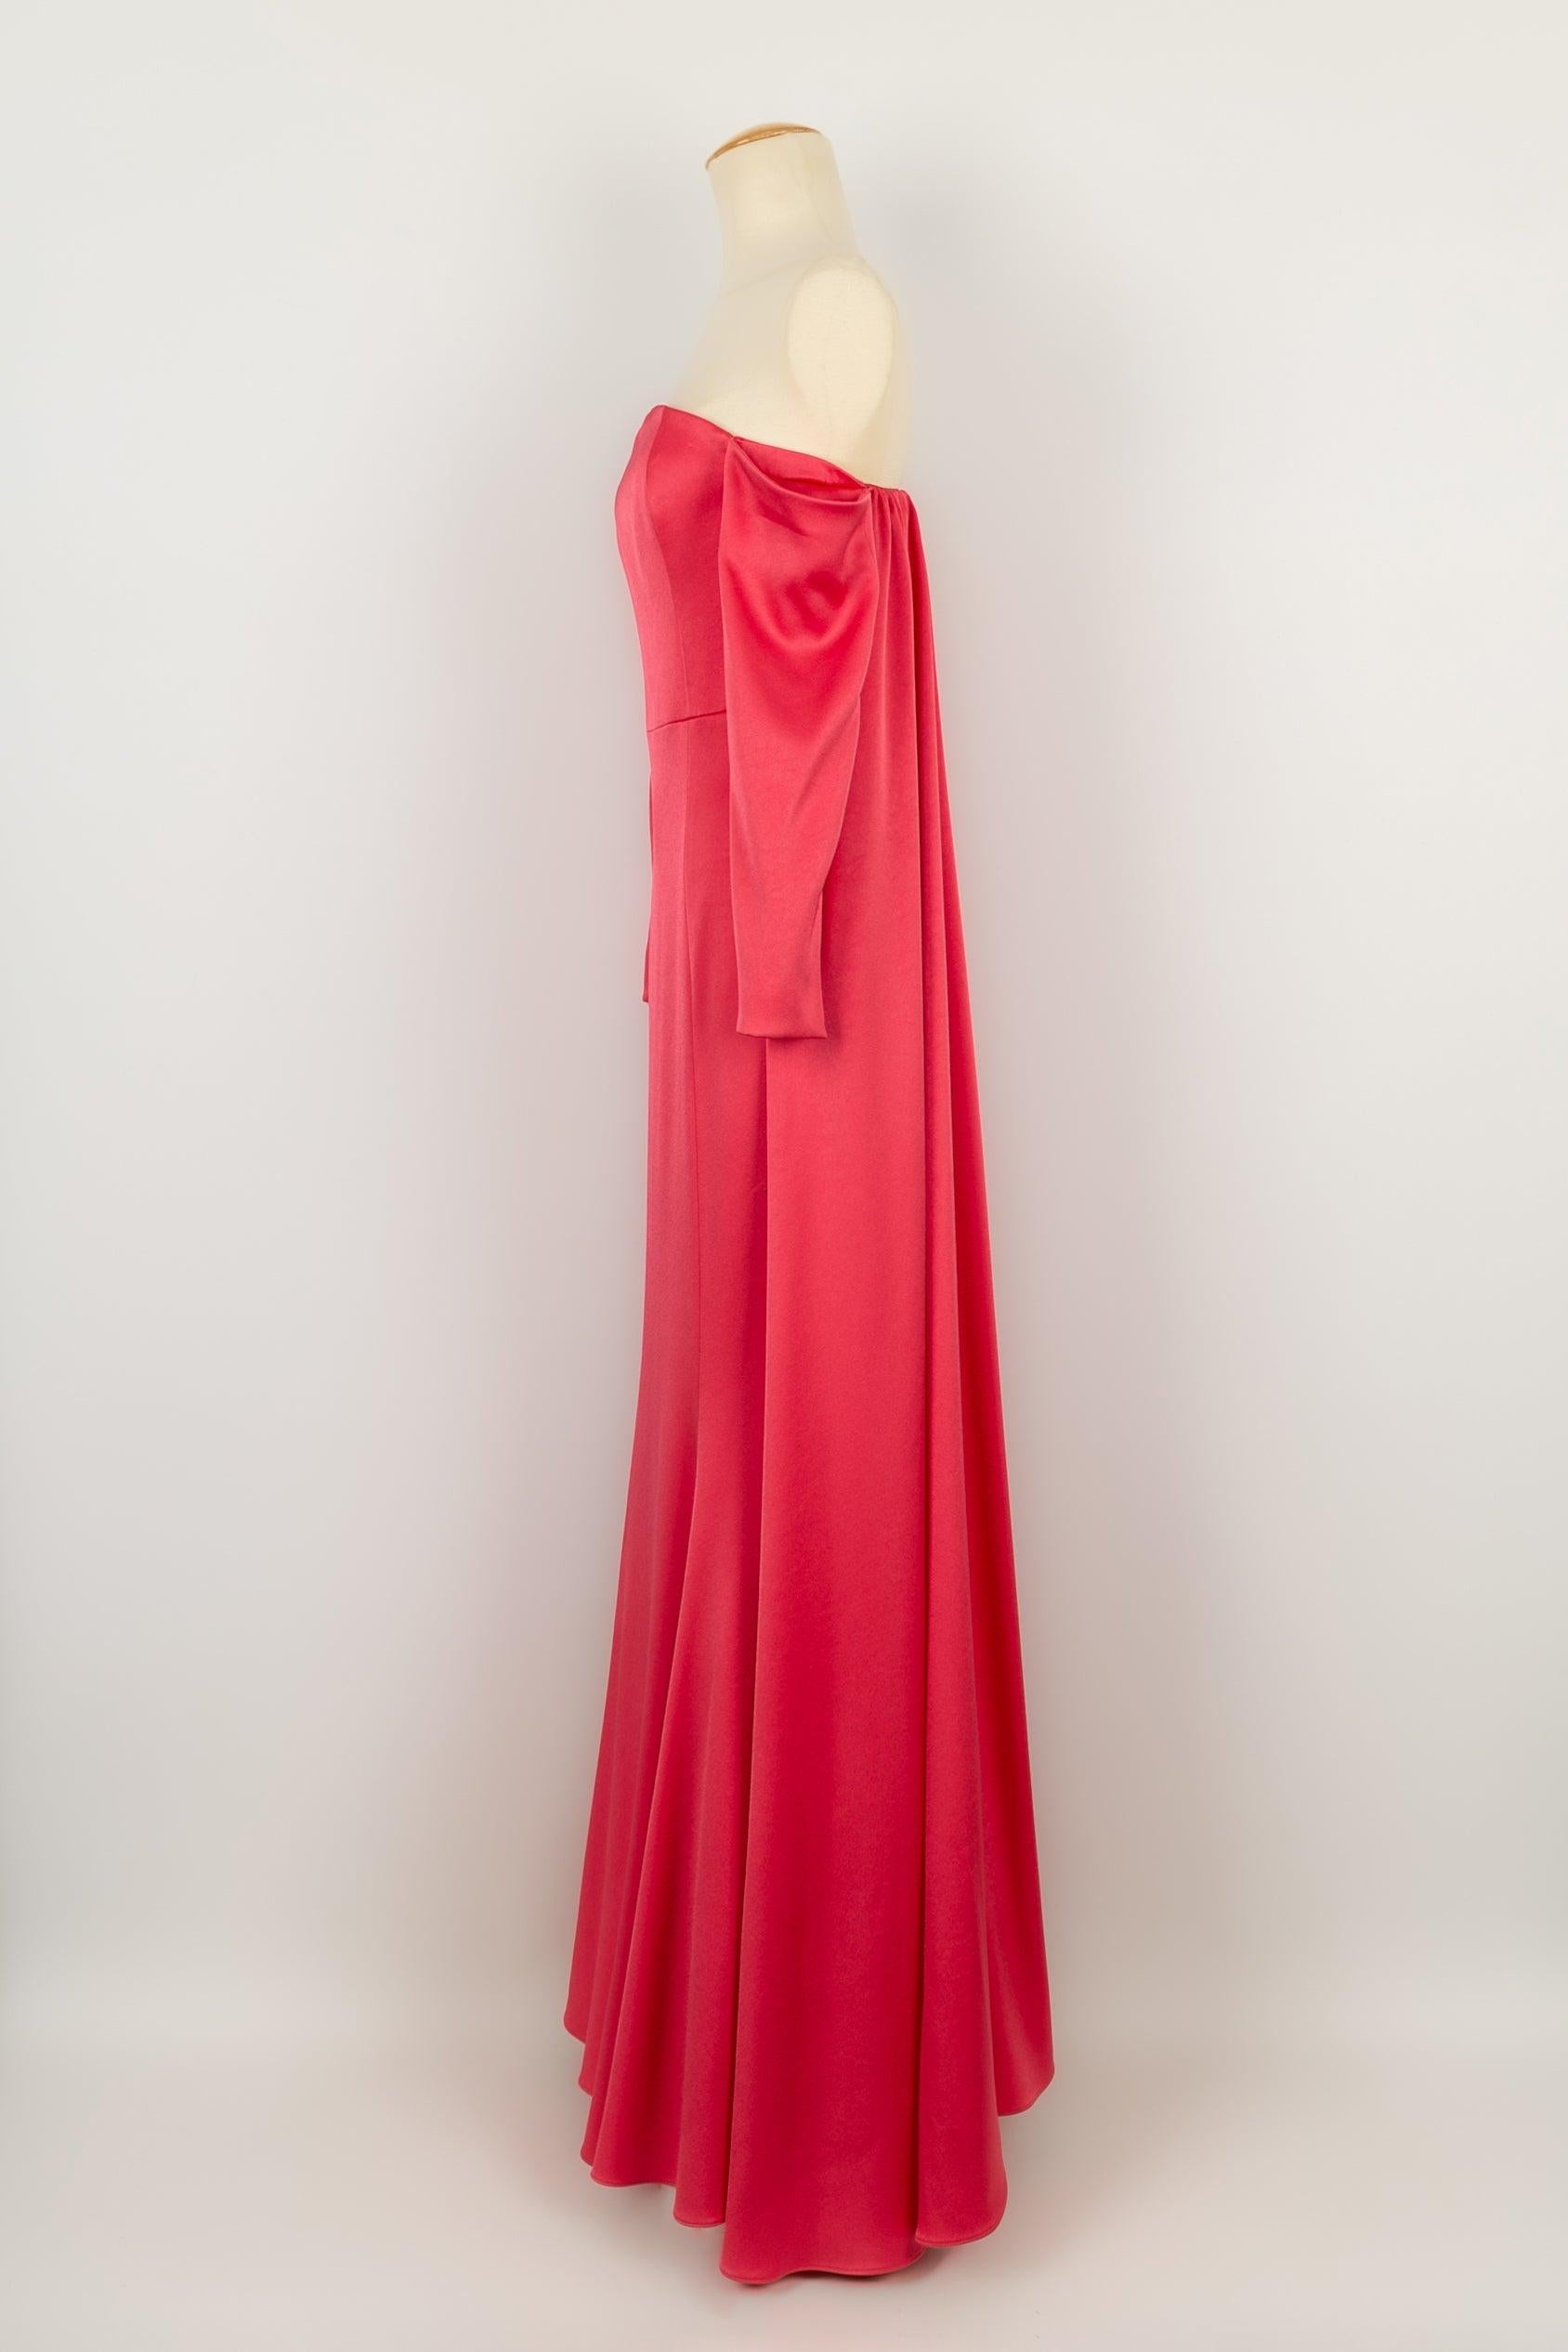 Women's Paule Ka Maxi Long Dress in Pink Duchess Satin, 2022 For Sale